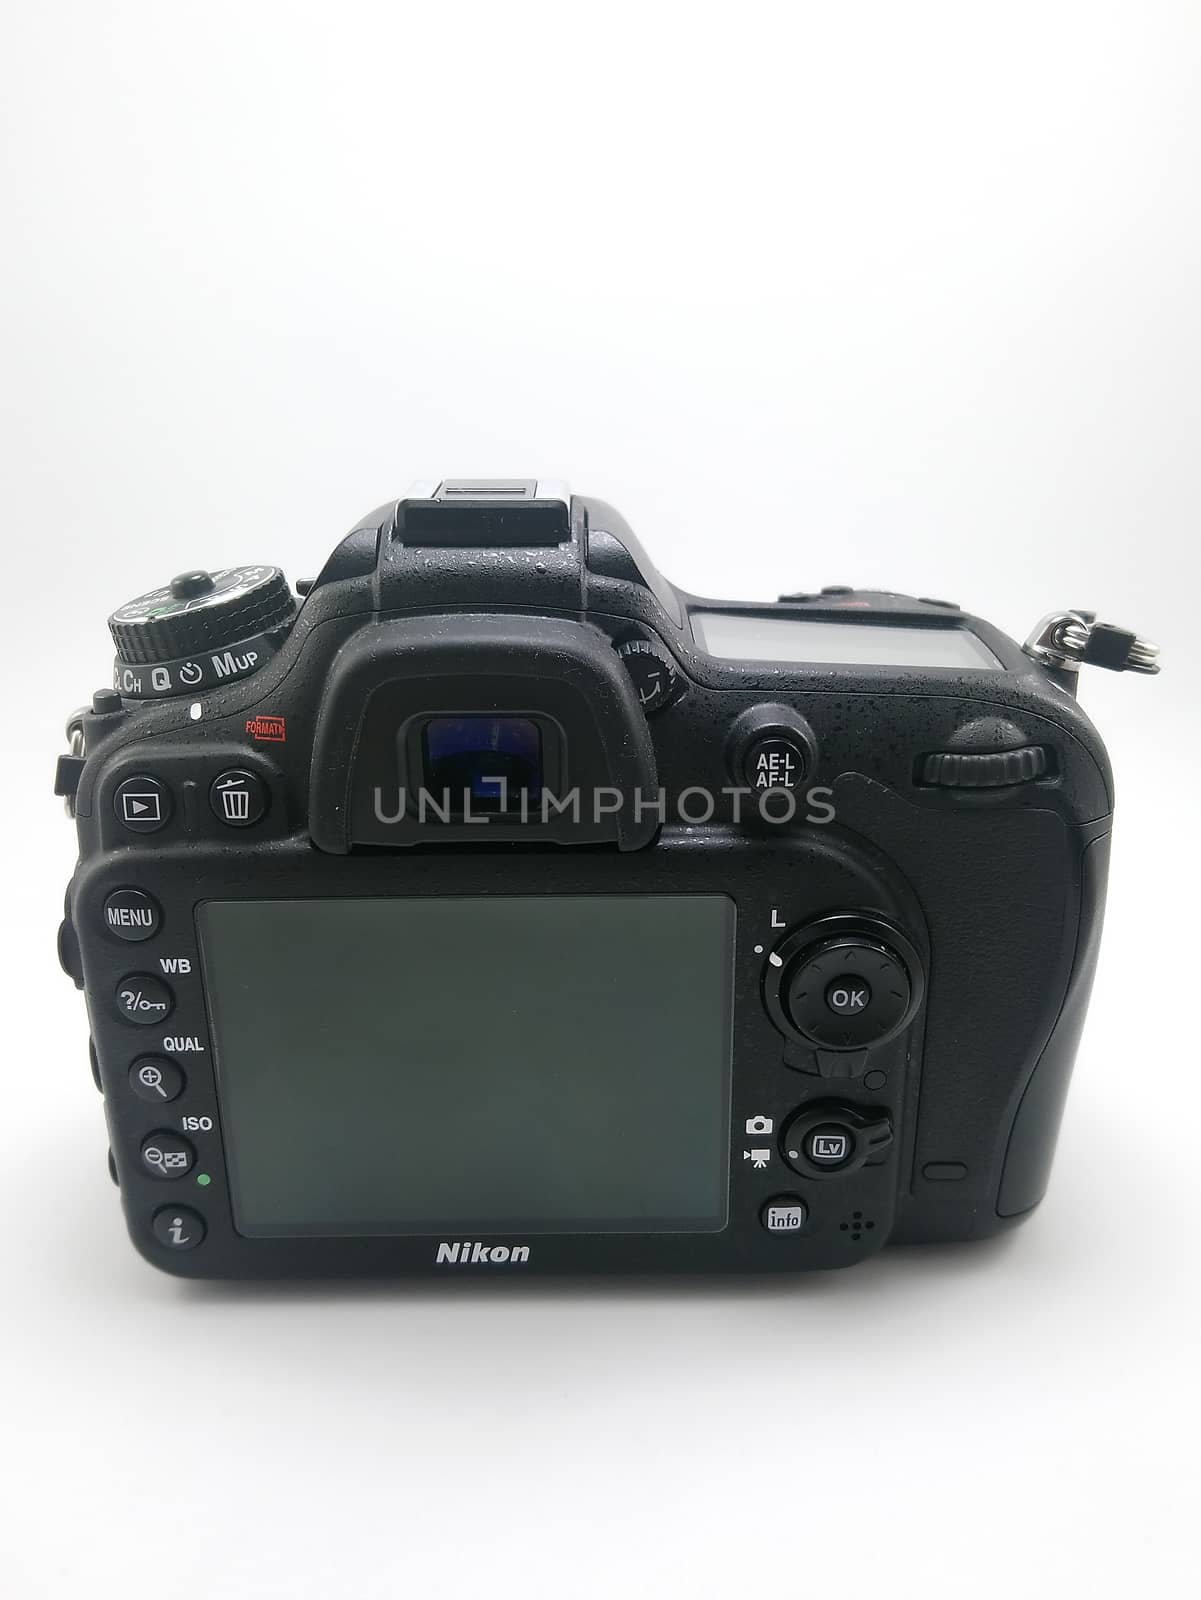 Nikon d7100 dslr camera in Manila, Philippines by imwaltersy